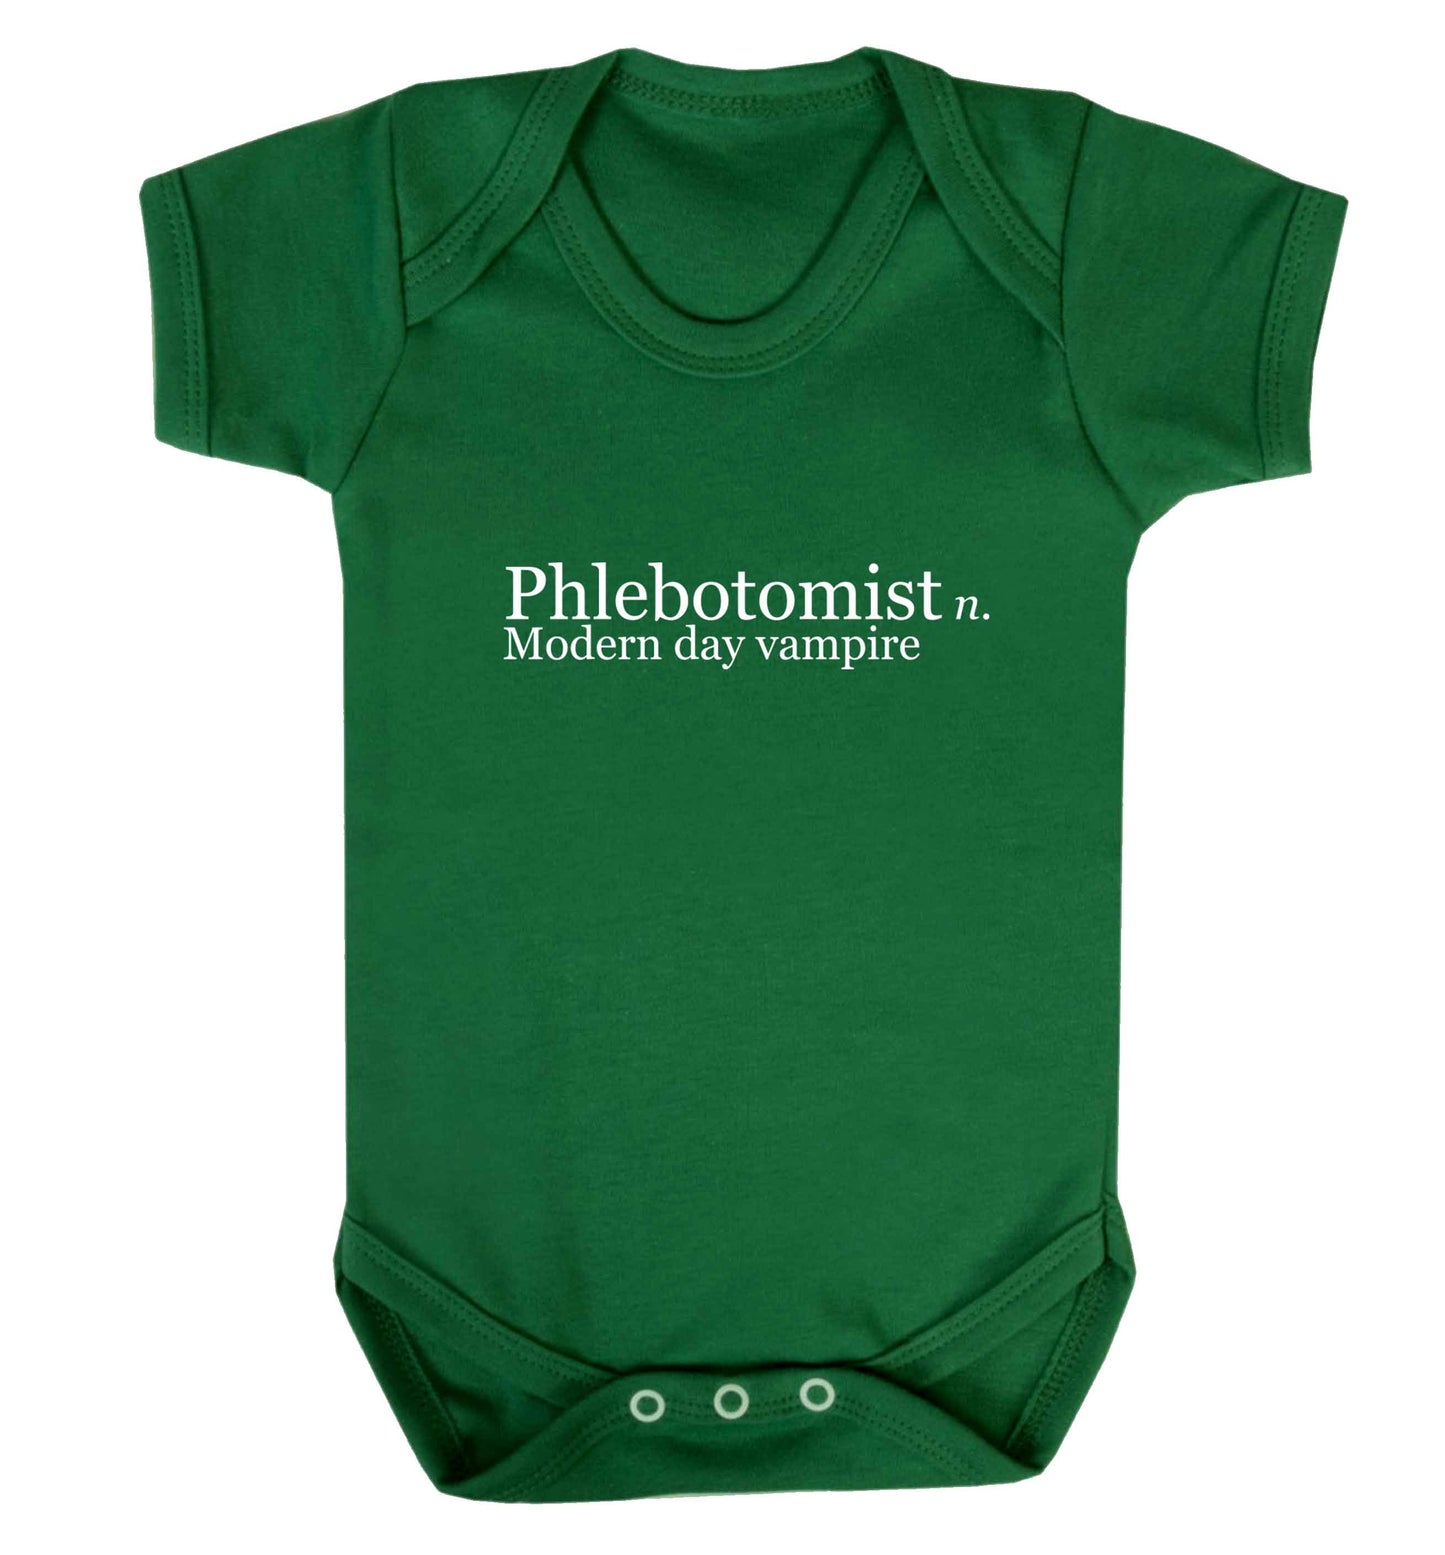 Phlebotomist - Modern day vampire baby vest green 18-24 months